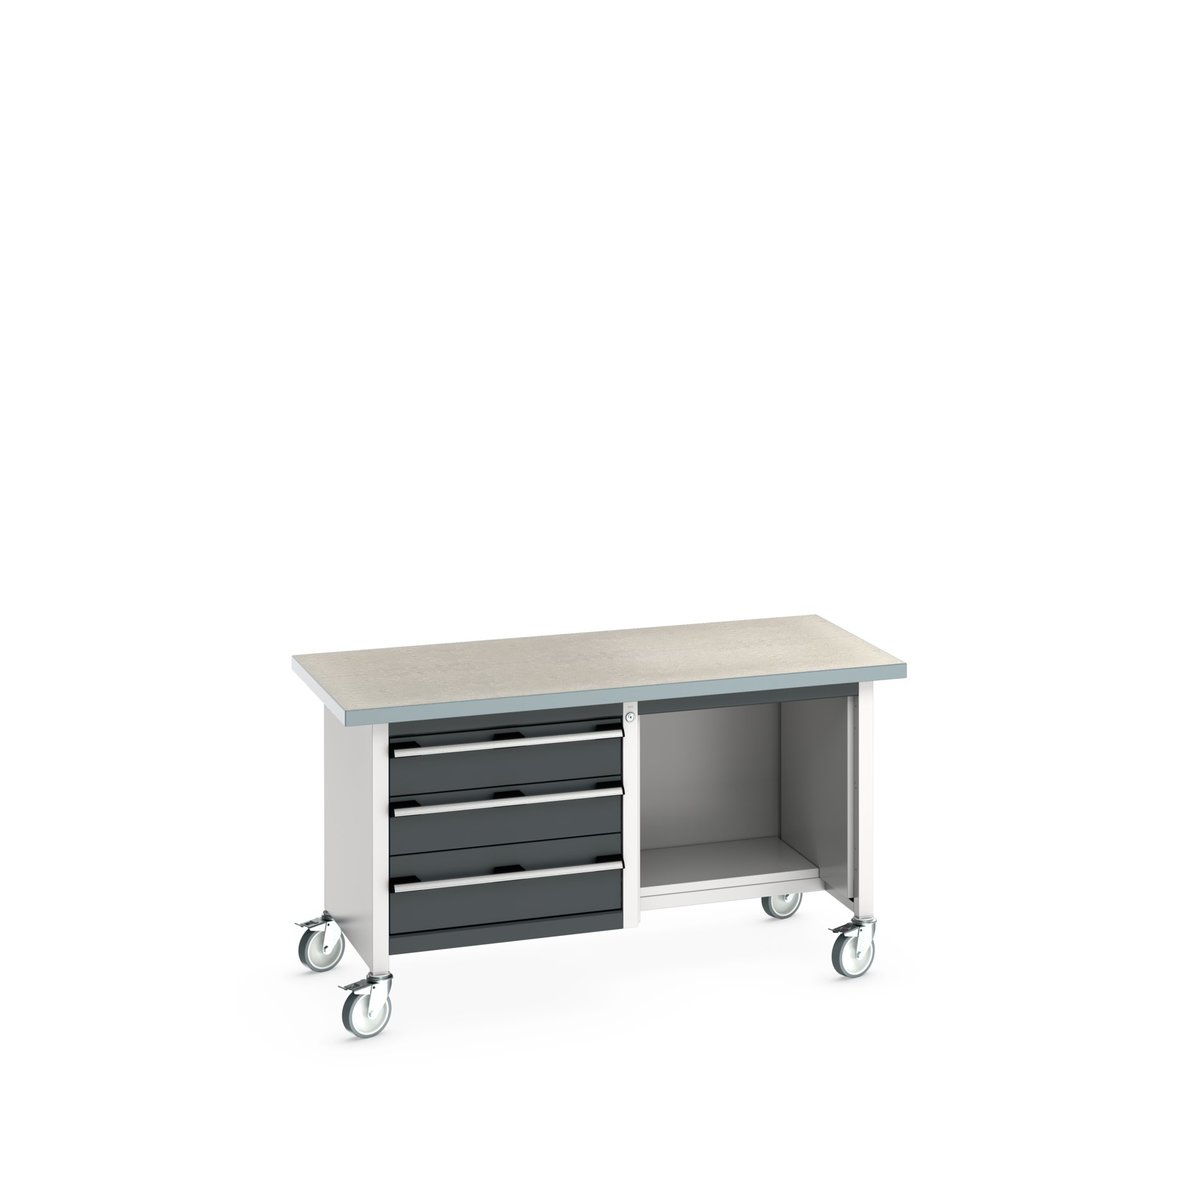 41002117. - cubio mobile storage bench (lino)